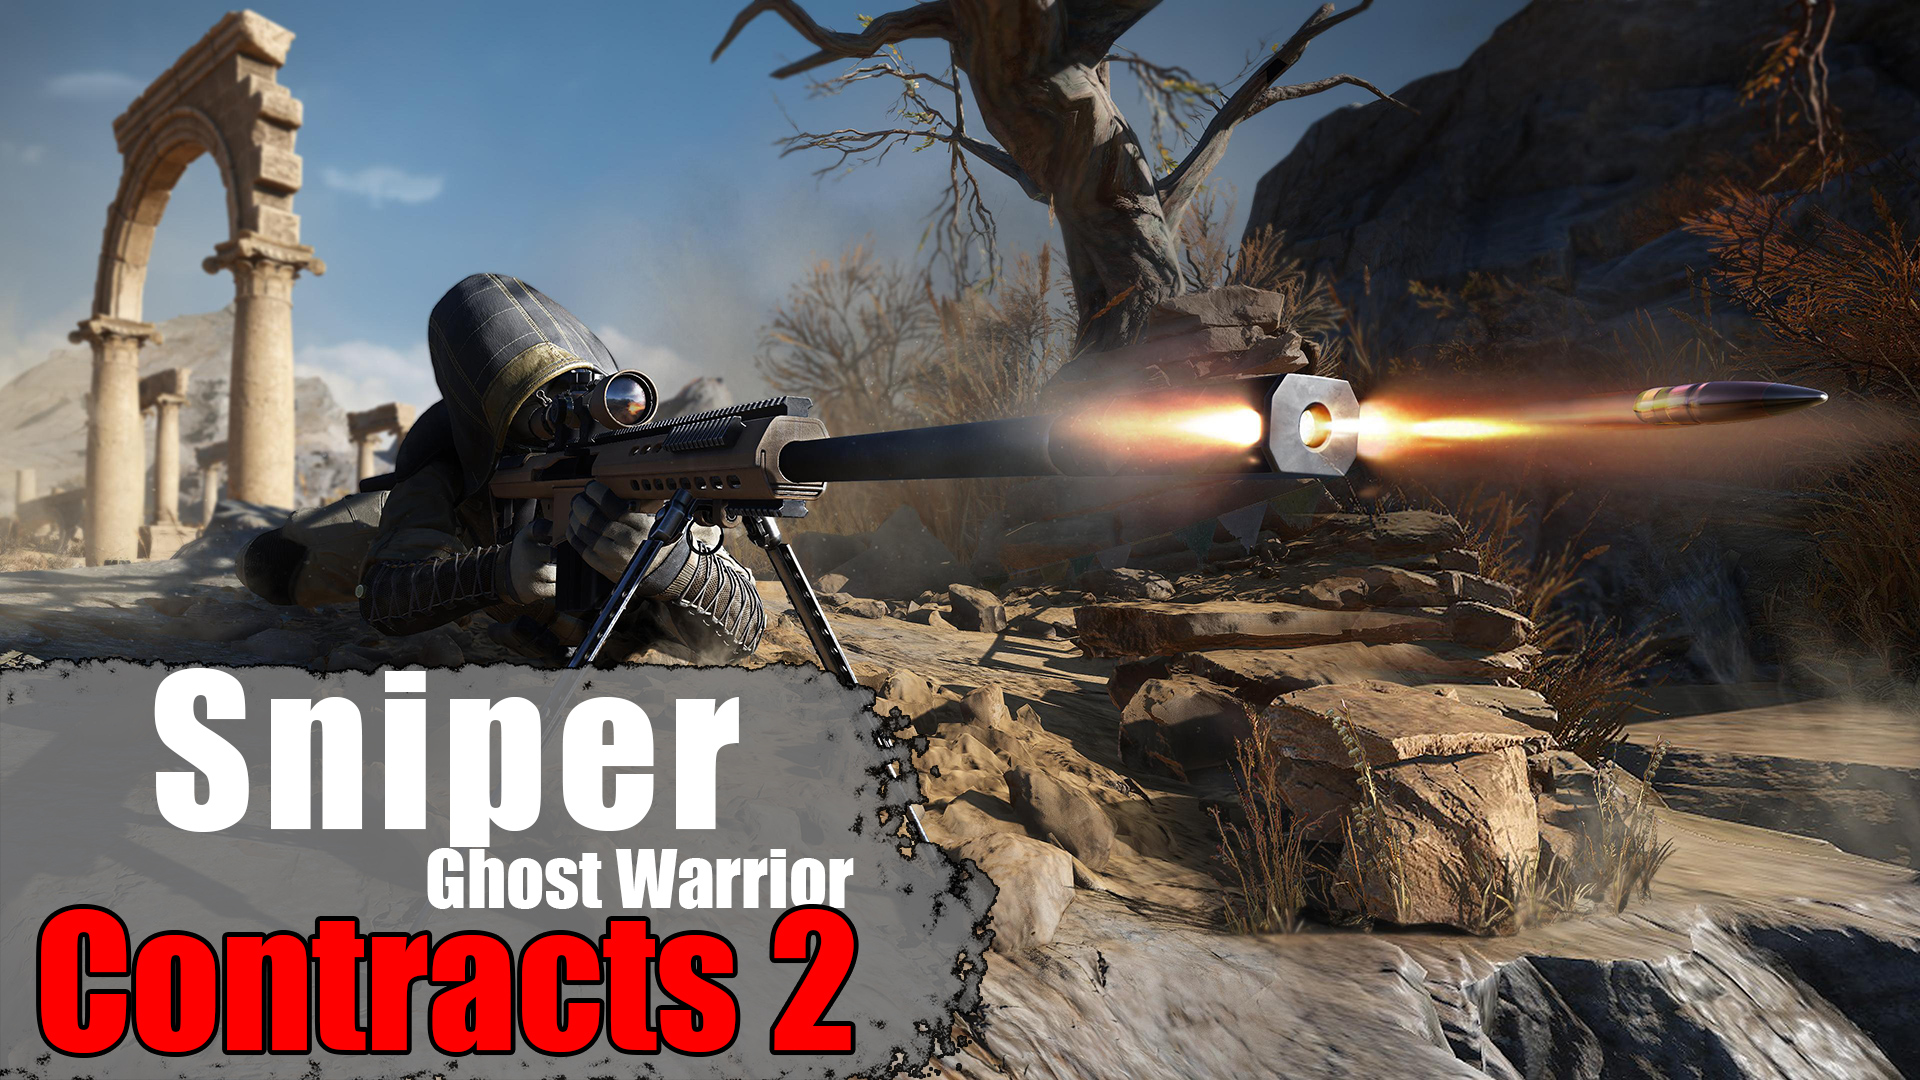 Обзор Sniper Ghost Warrior Contracts 2 | Польский шутер — больше не ругательство